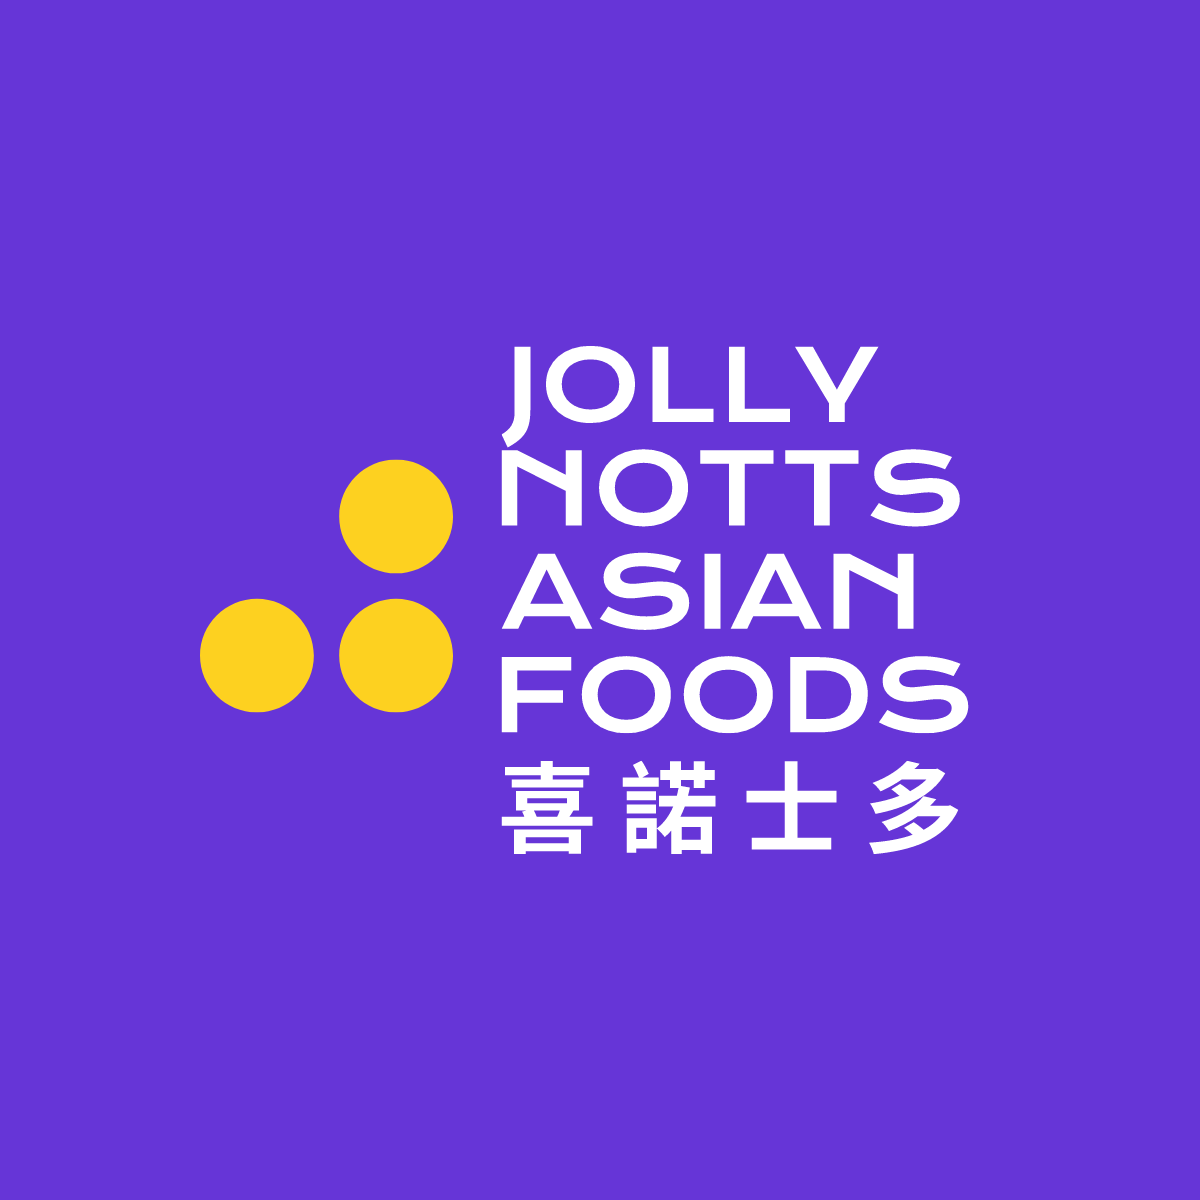 Jolly Notts Asian Foods